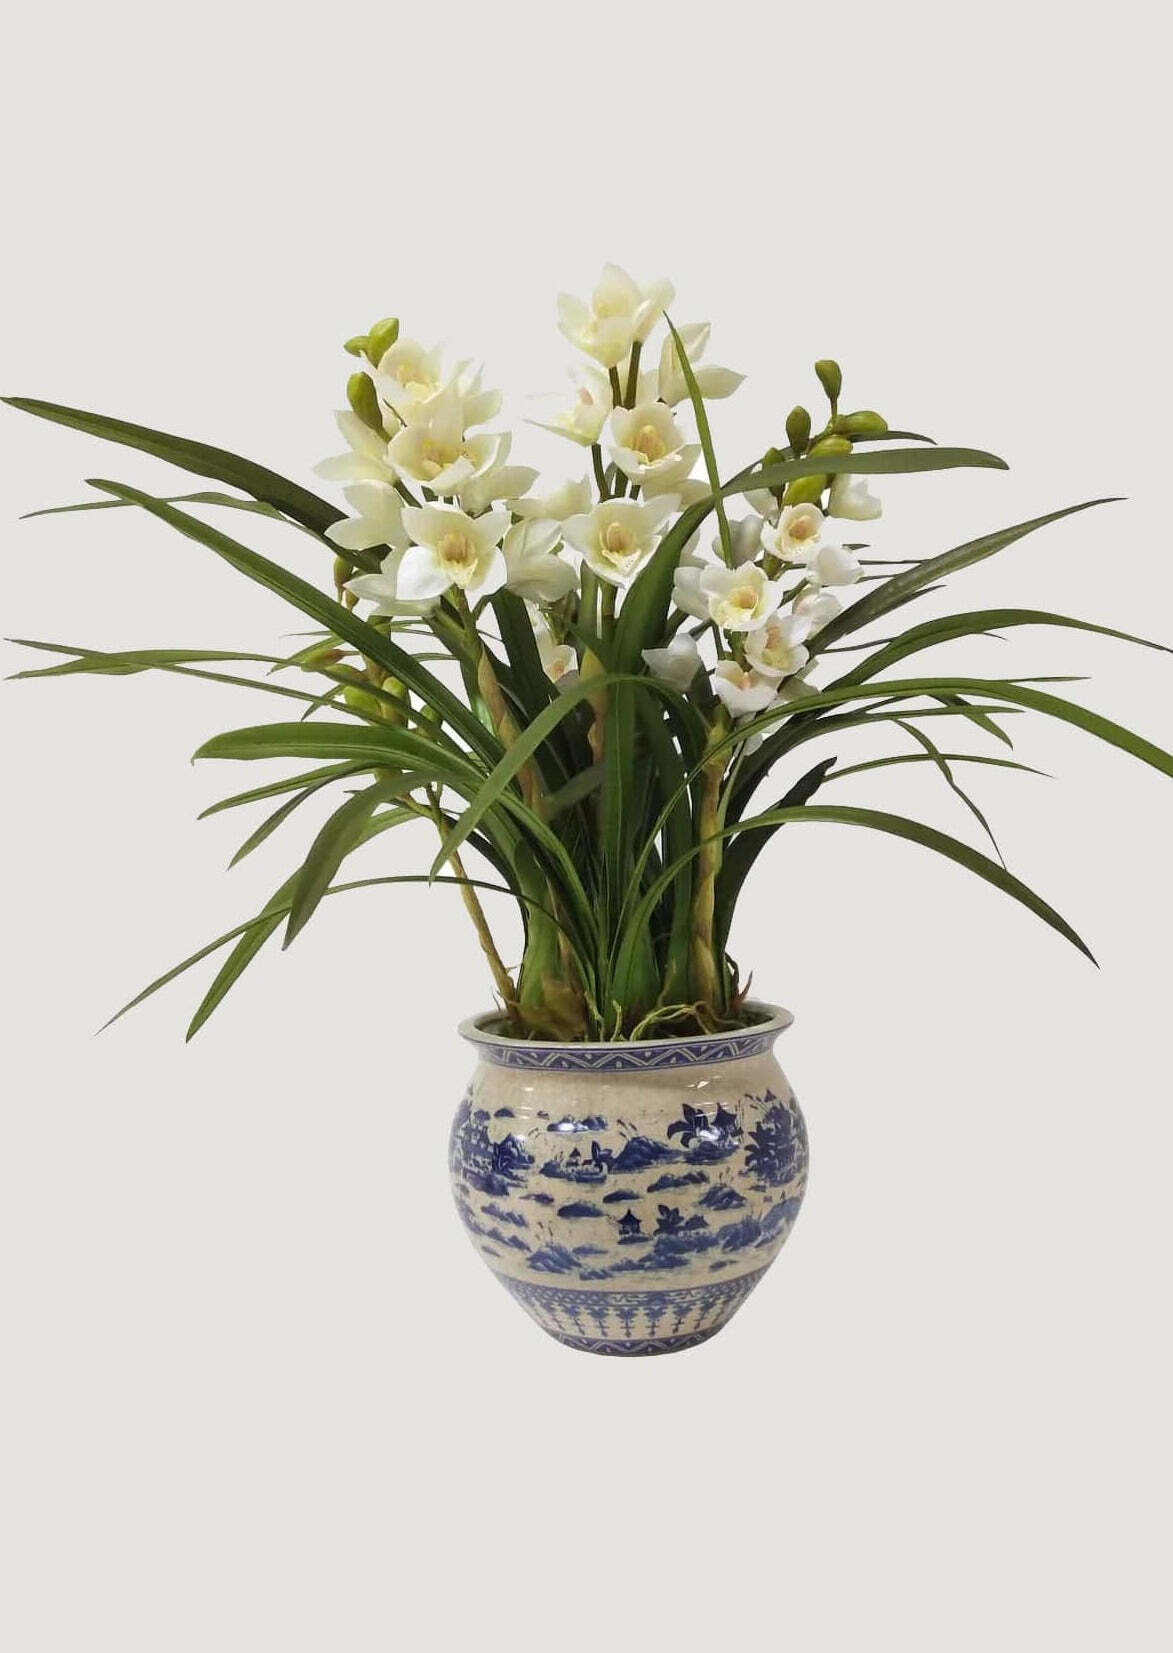 Faux Blooming Orchid Arrangement in Ceramic Pot - 33